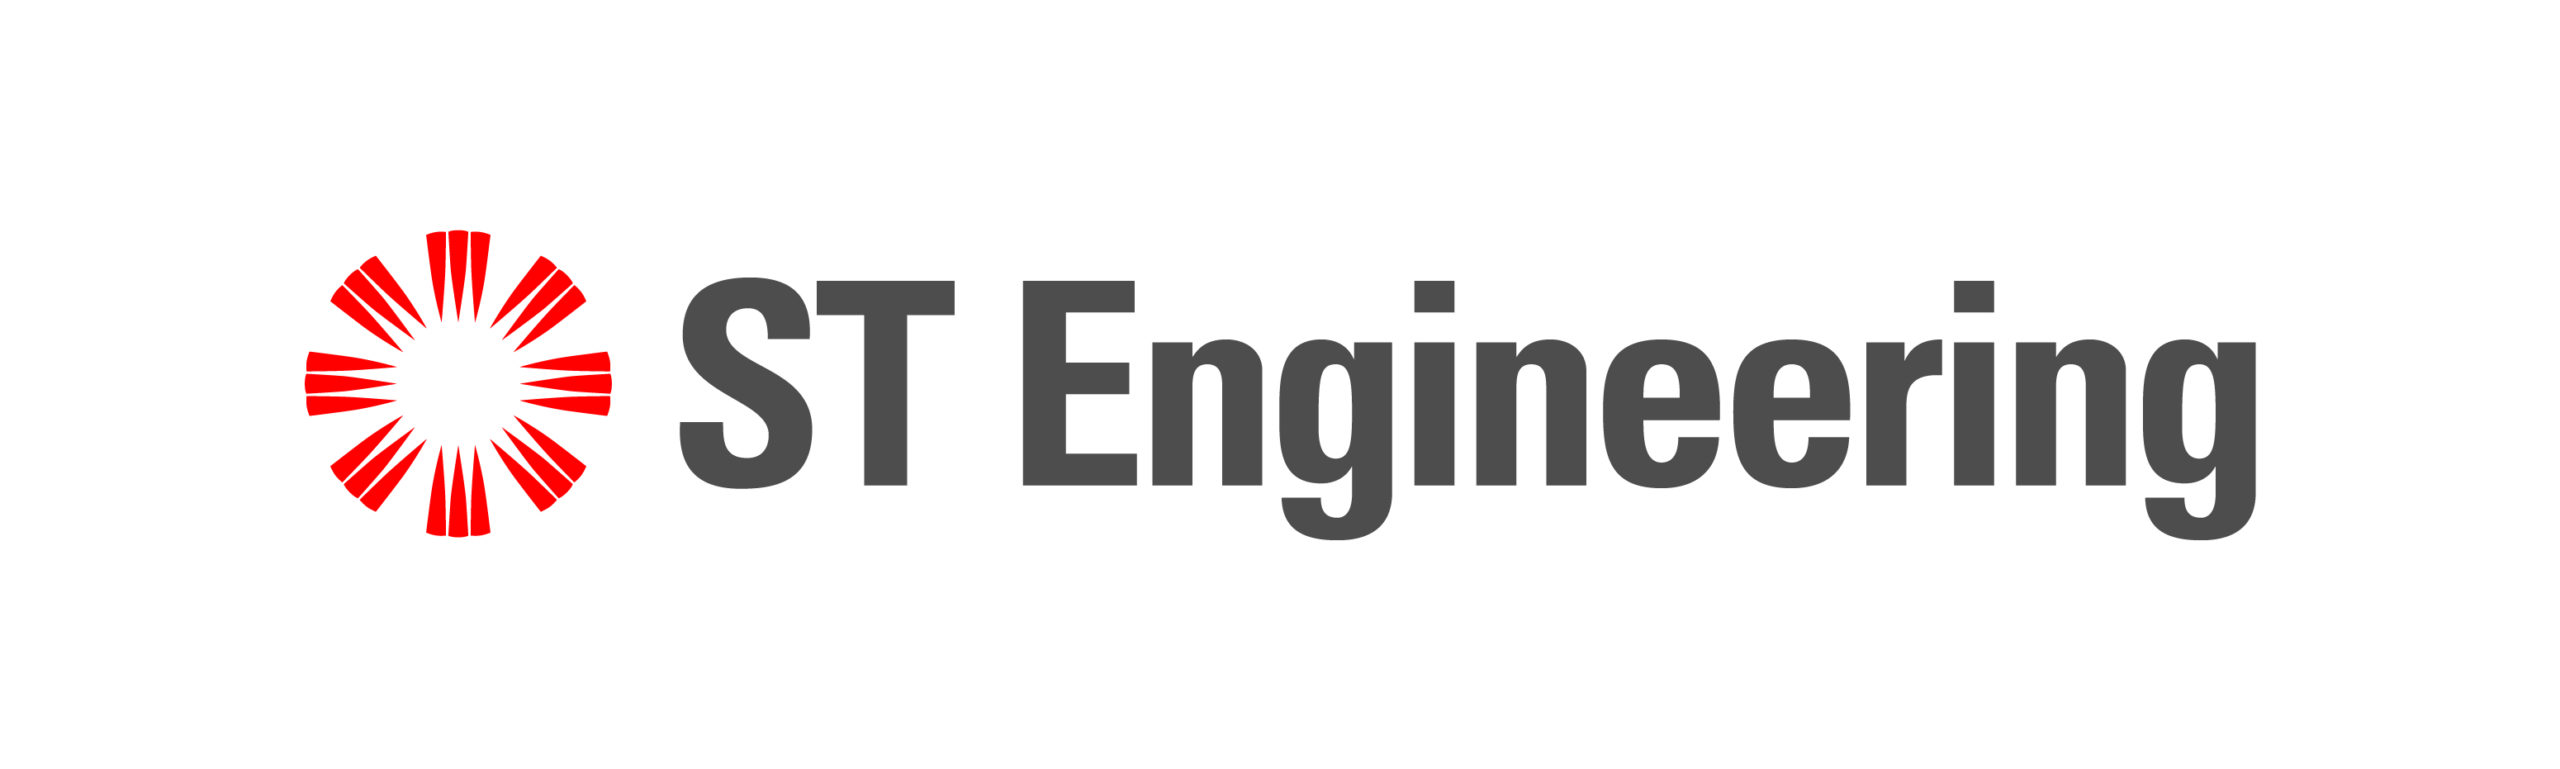 ST-Engineering-logo